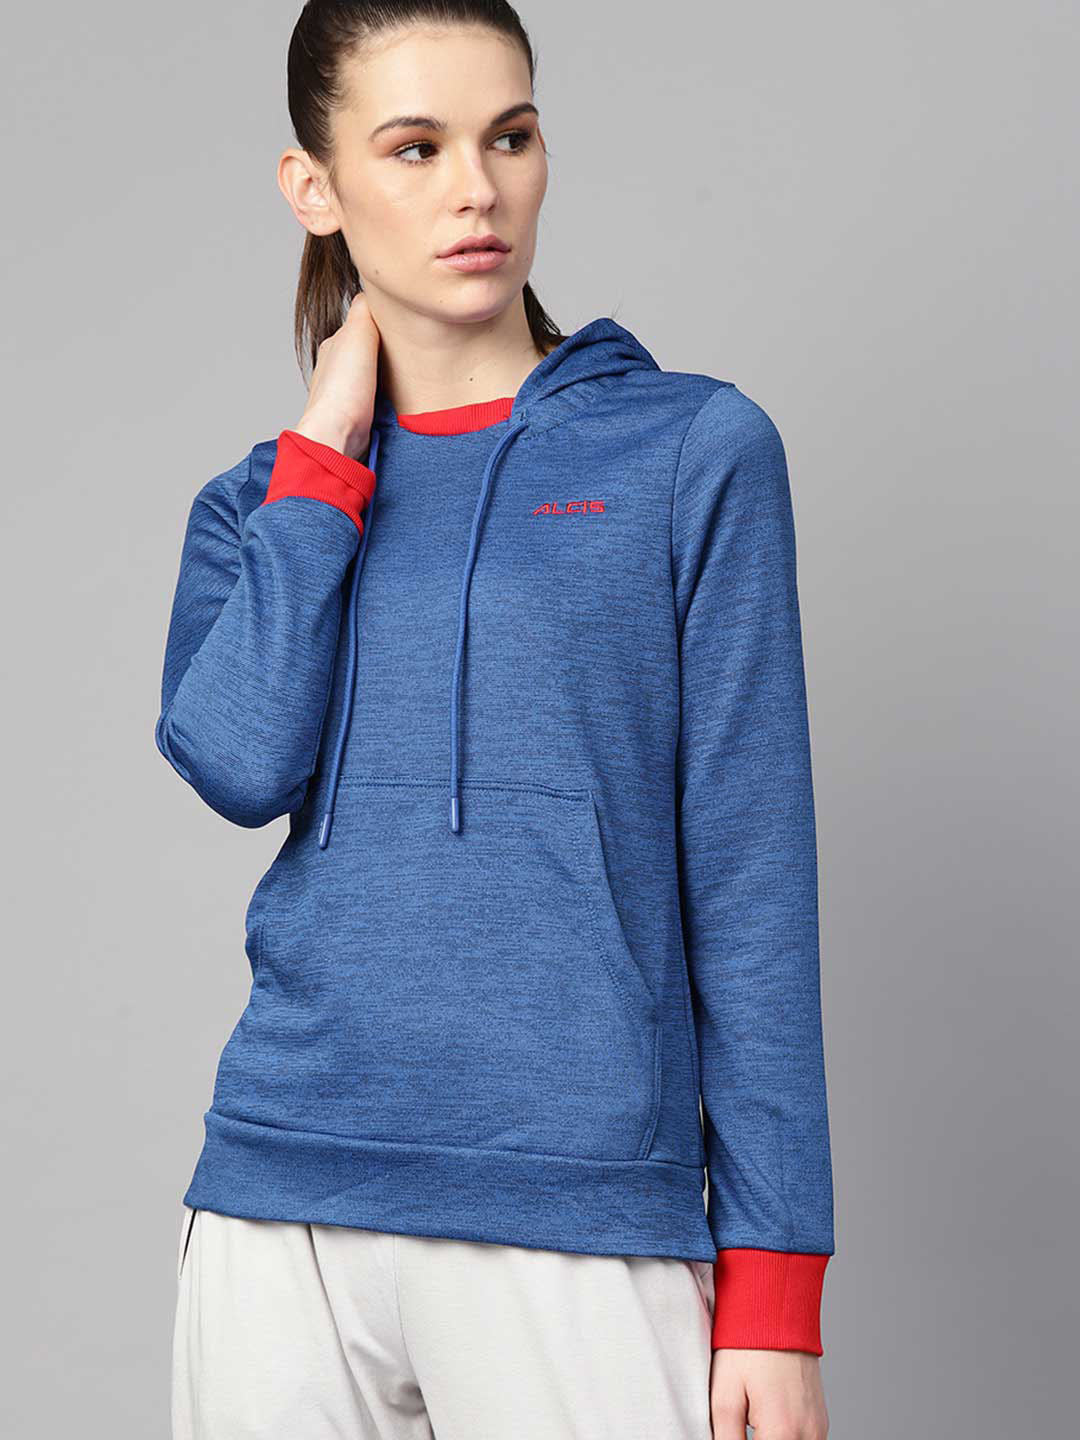 Alcis Women Blue Self Design Hooded Sweatshirt